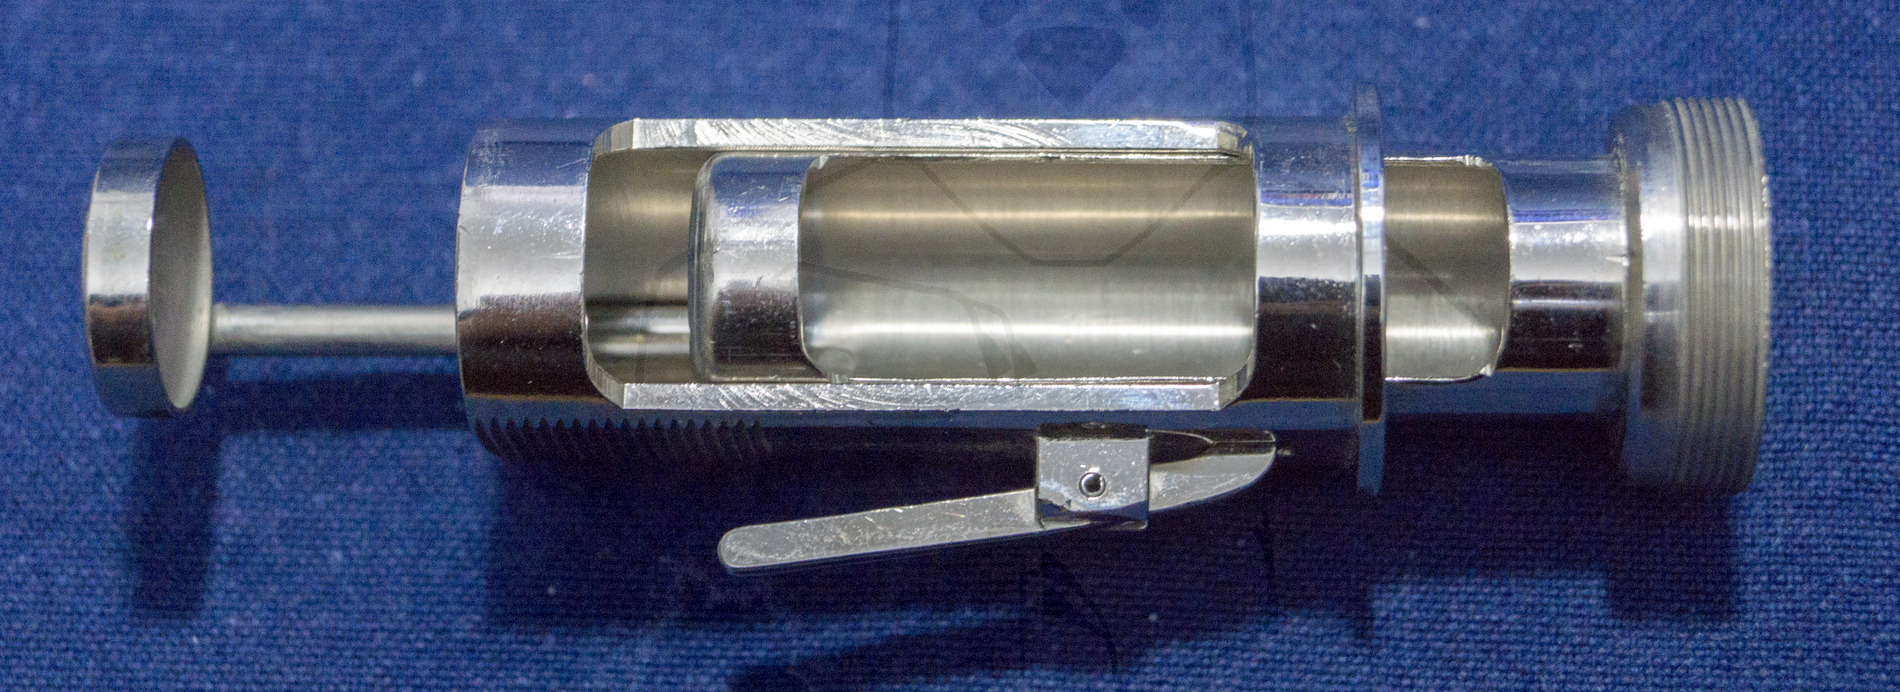 Insulininjektor "Diarapid", 1963'er Jahre, Injektor ohne Spritze